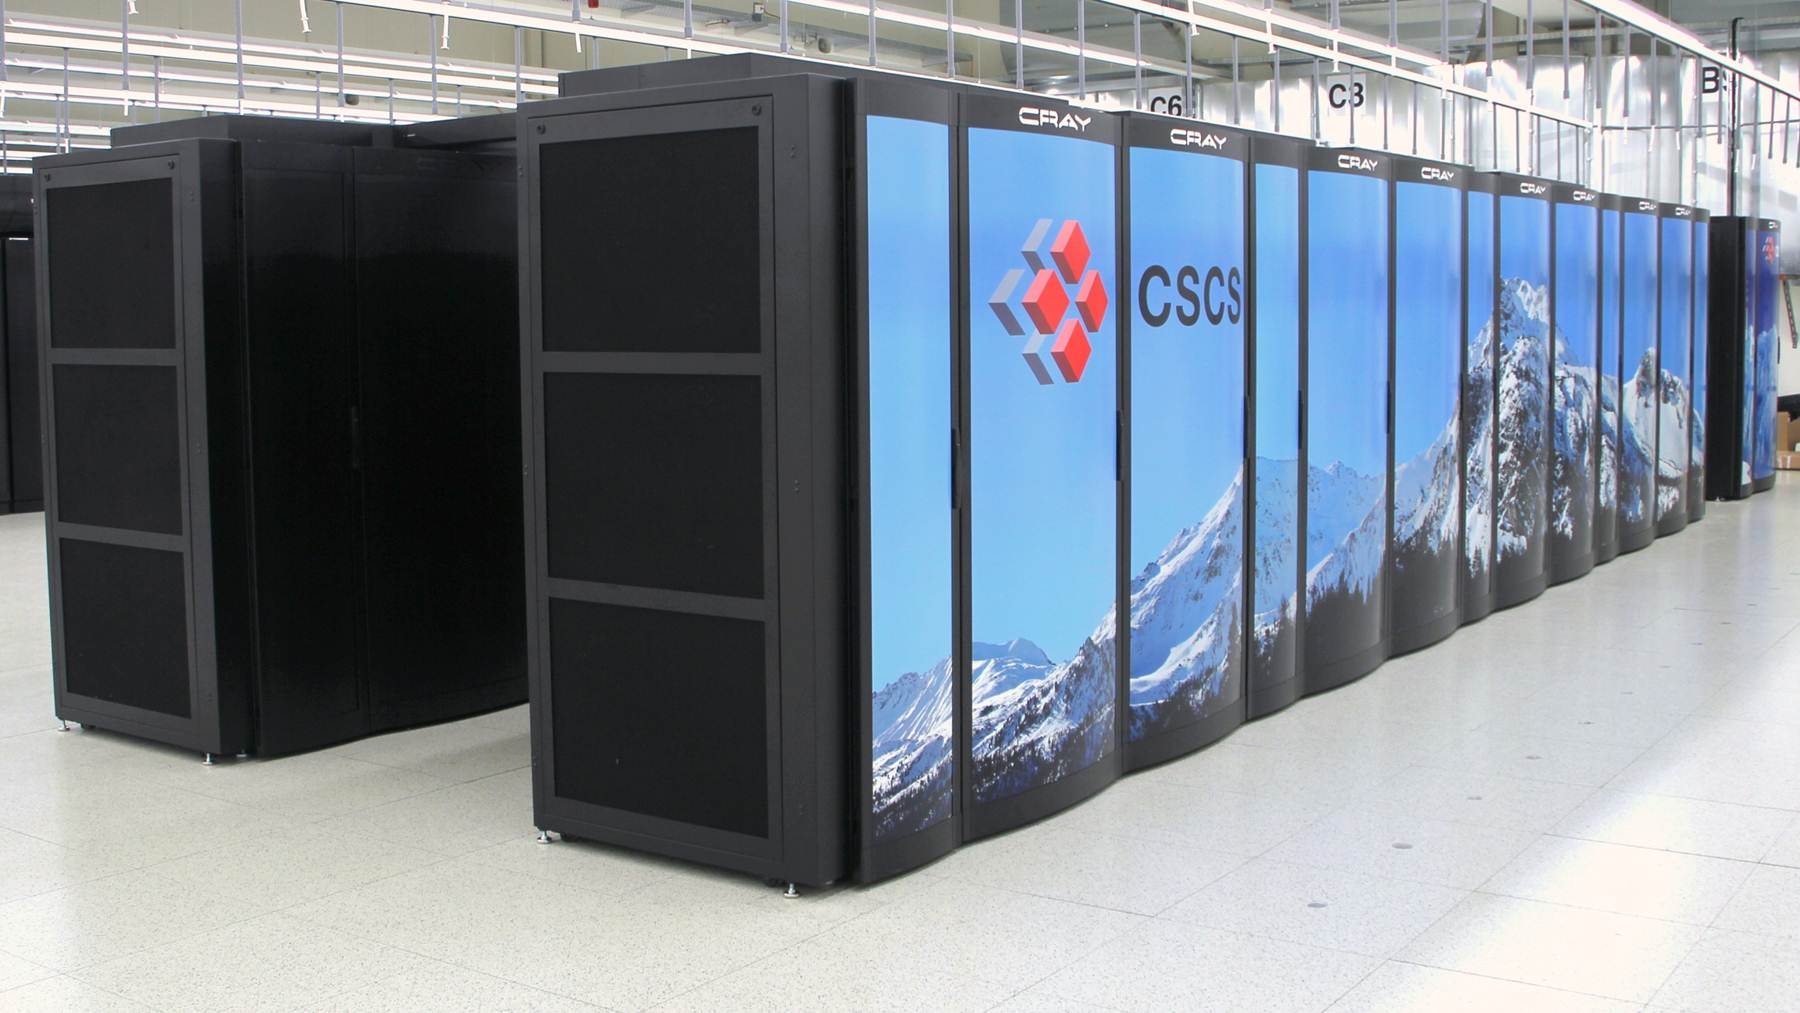 CSCS-Piz-Daint-Supercomputer-Powered-by-NVIDIA-Tesla-K20X-GPU-Accelerators